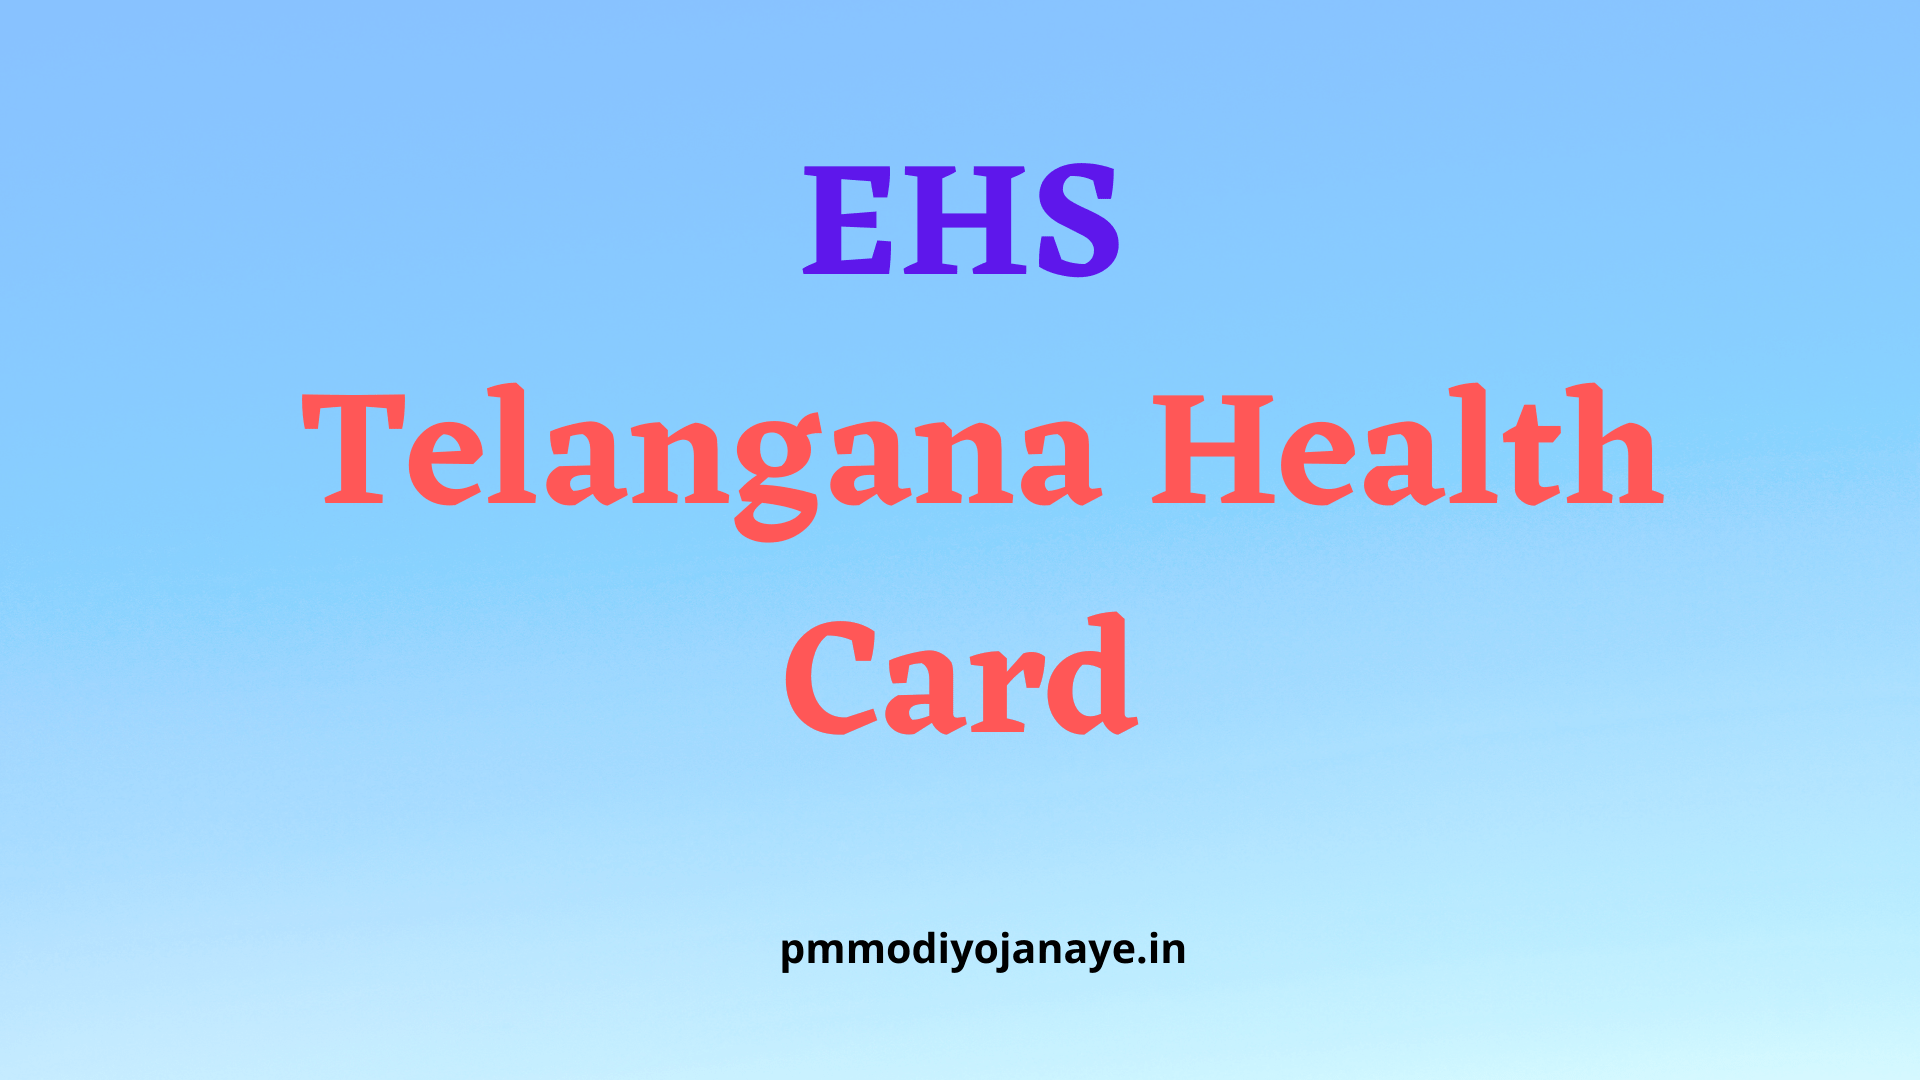 Telangana_Health_card_EHS